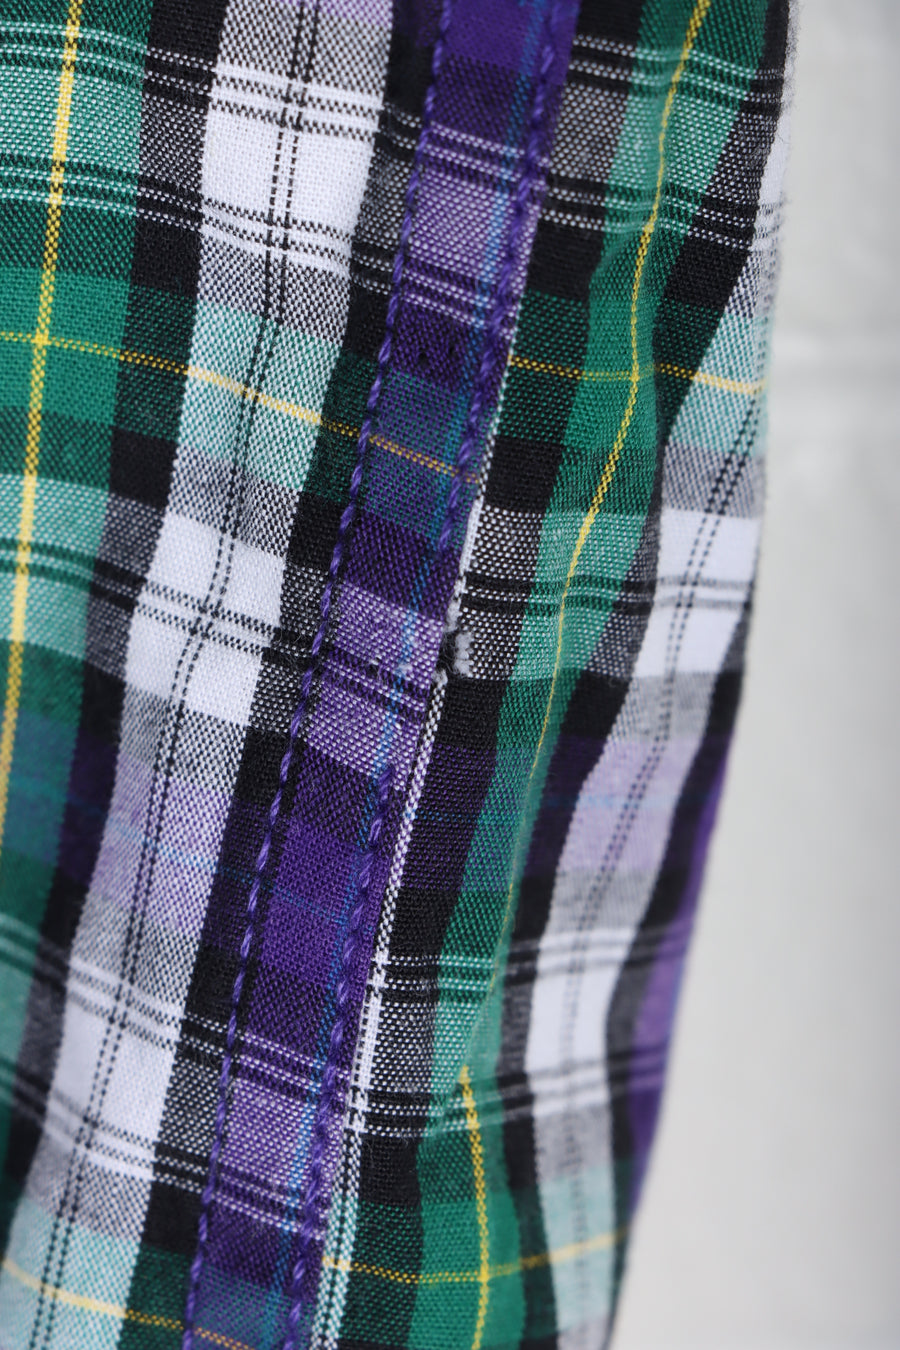 TOMMY HILFIGER JEANS Purple & Green Plaid Button Up Shirt (XL)